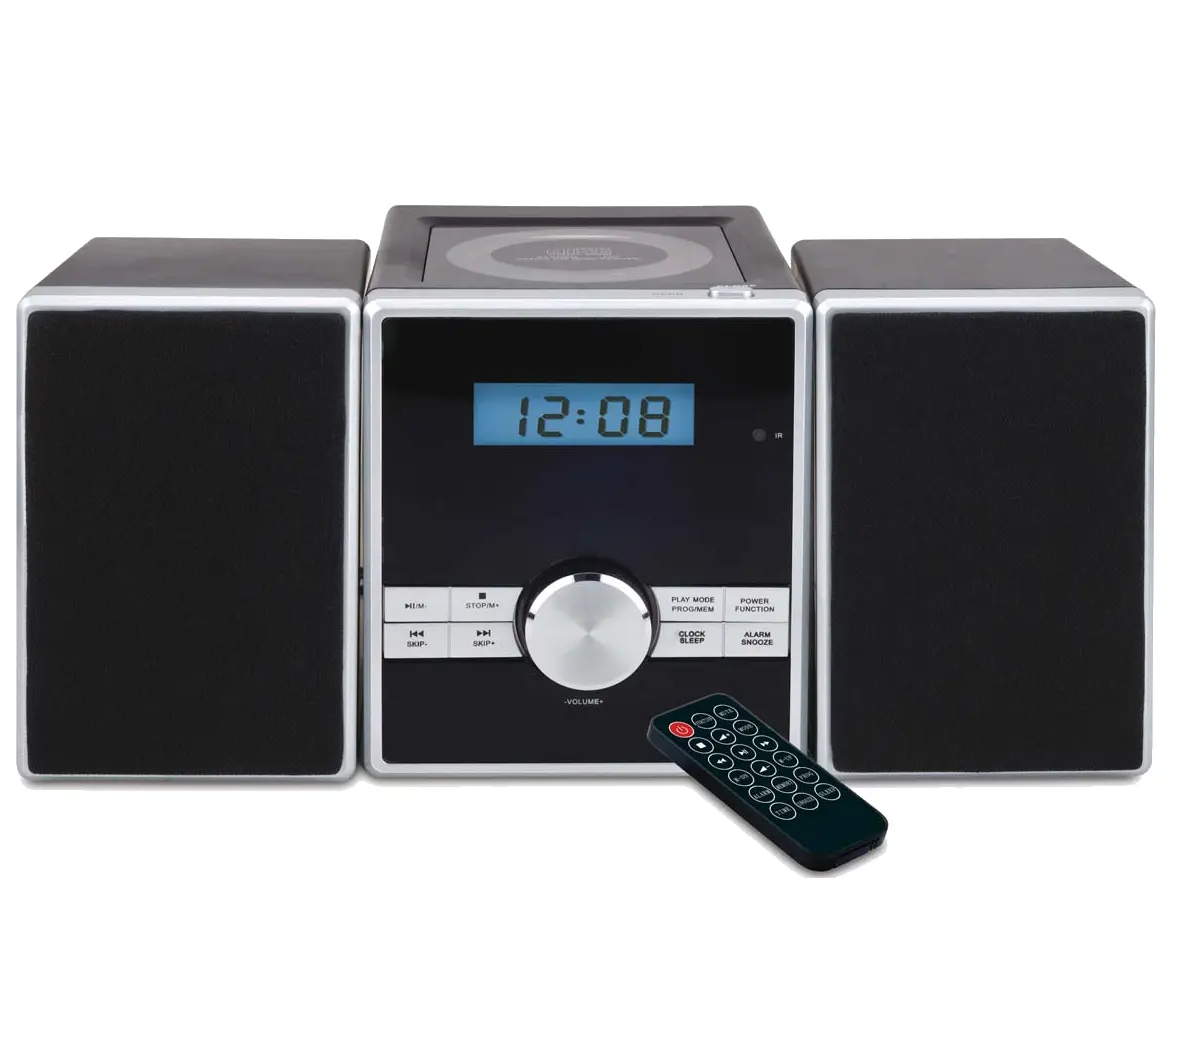 Micro Hifi System CD Player Alarm Clock Radio with Remote control